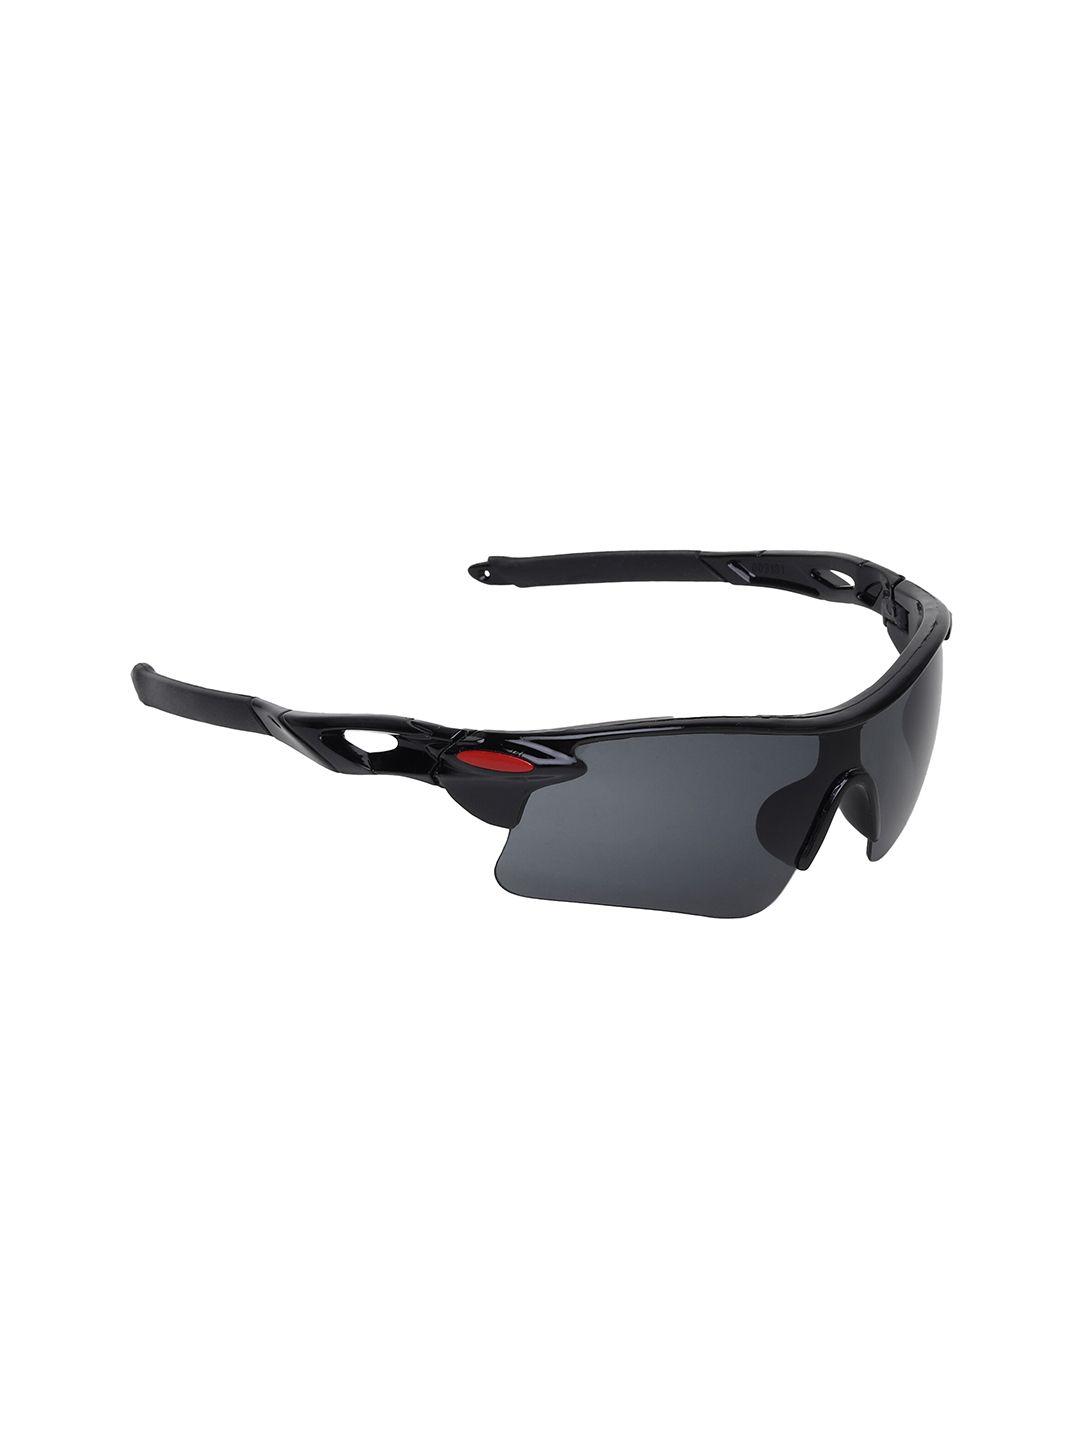 swiss design cateye sunglasses with uv protected lens sdsg-9181-07